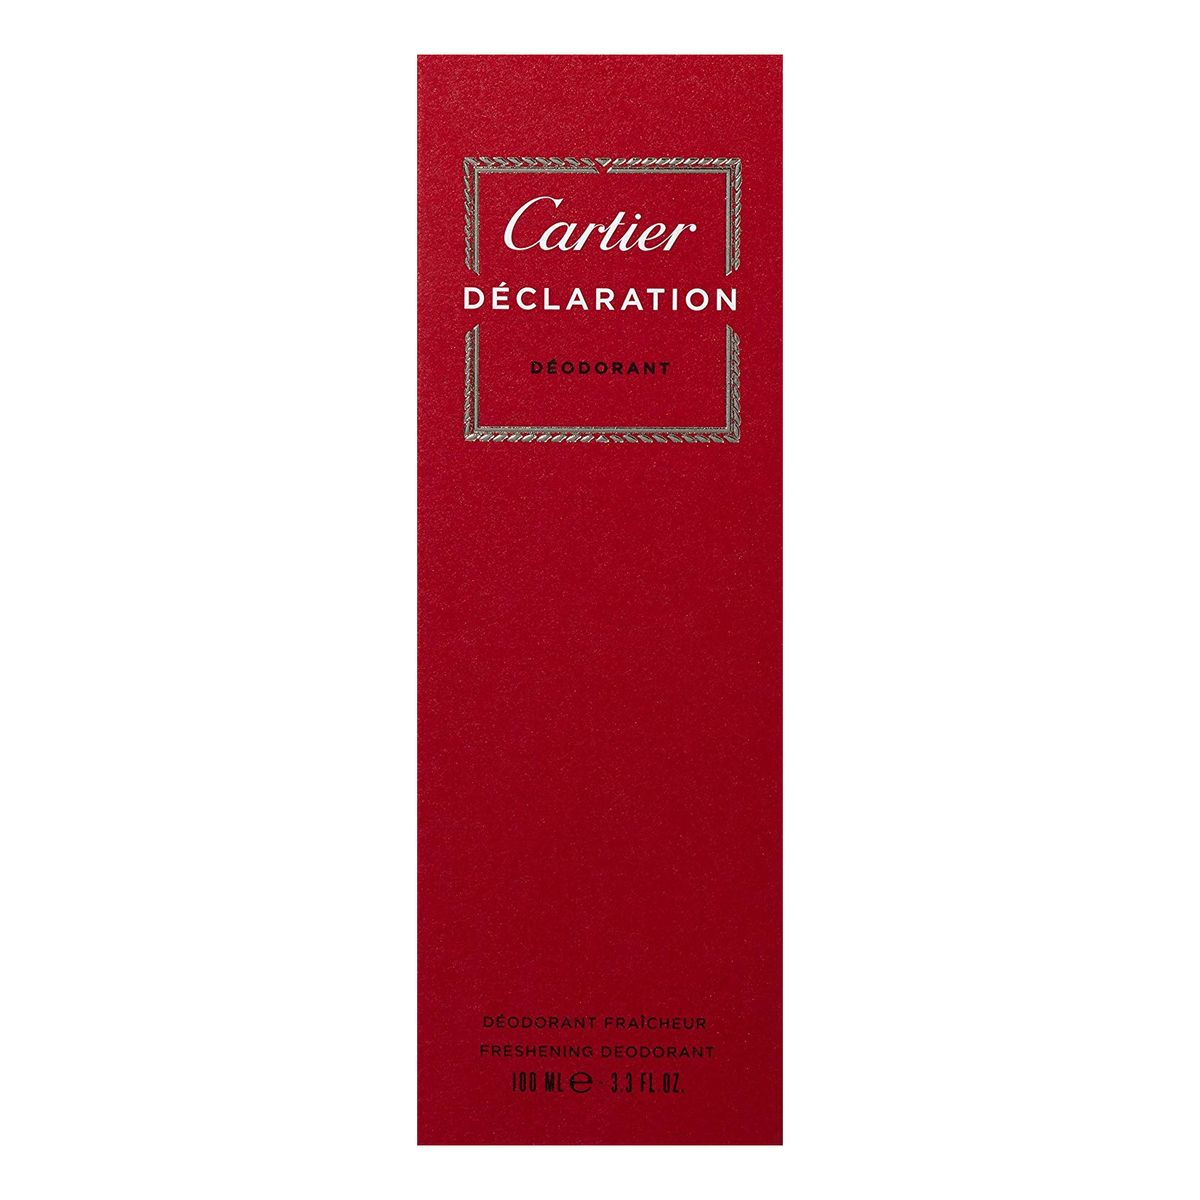 Cartier Declaration dezodorant 100ml